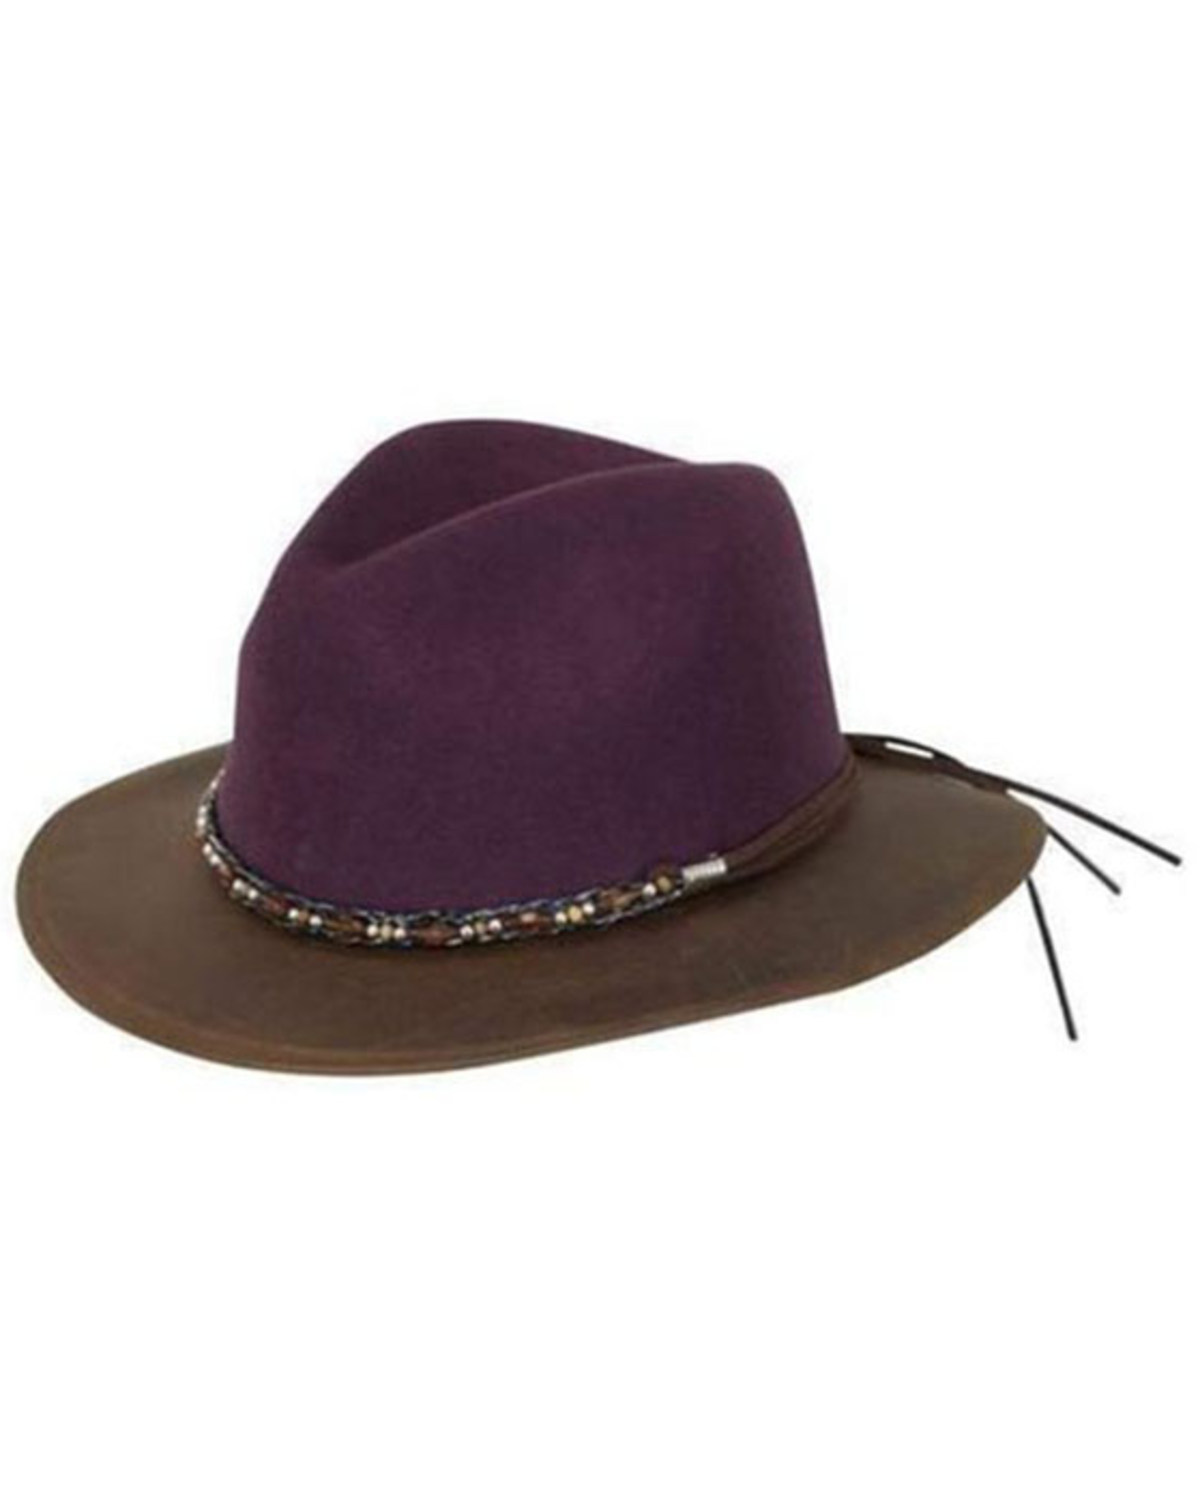 Outback Trading Co. Men's Canberra Felt Western Fashion Hat